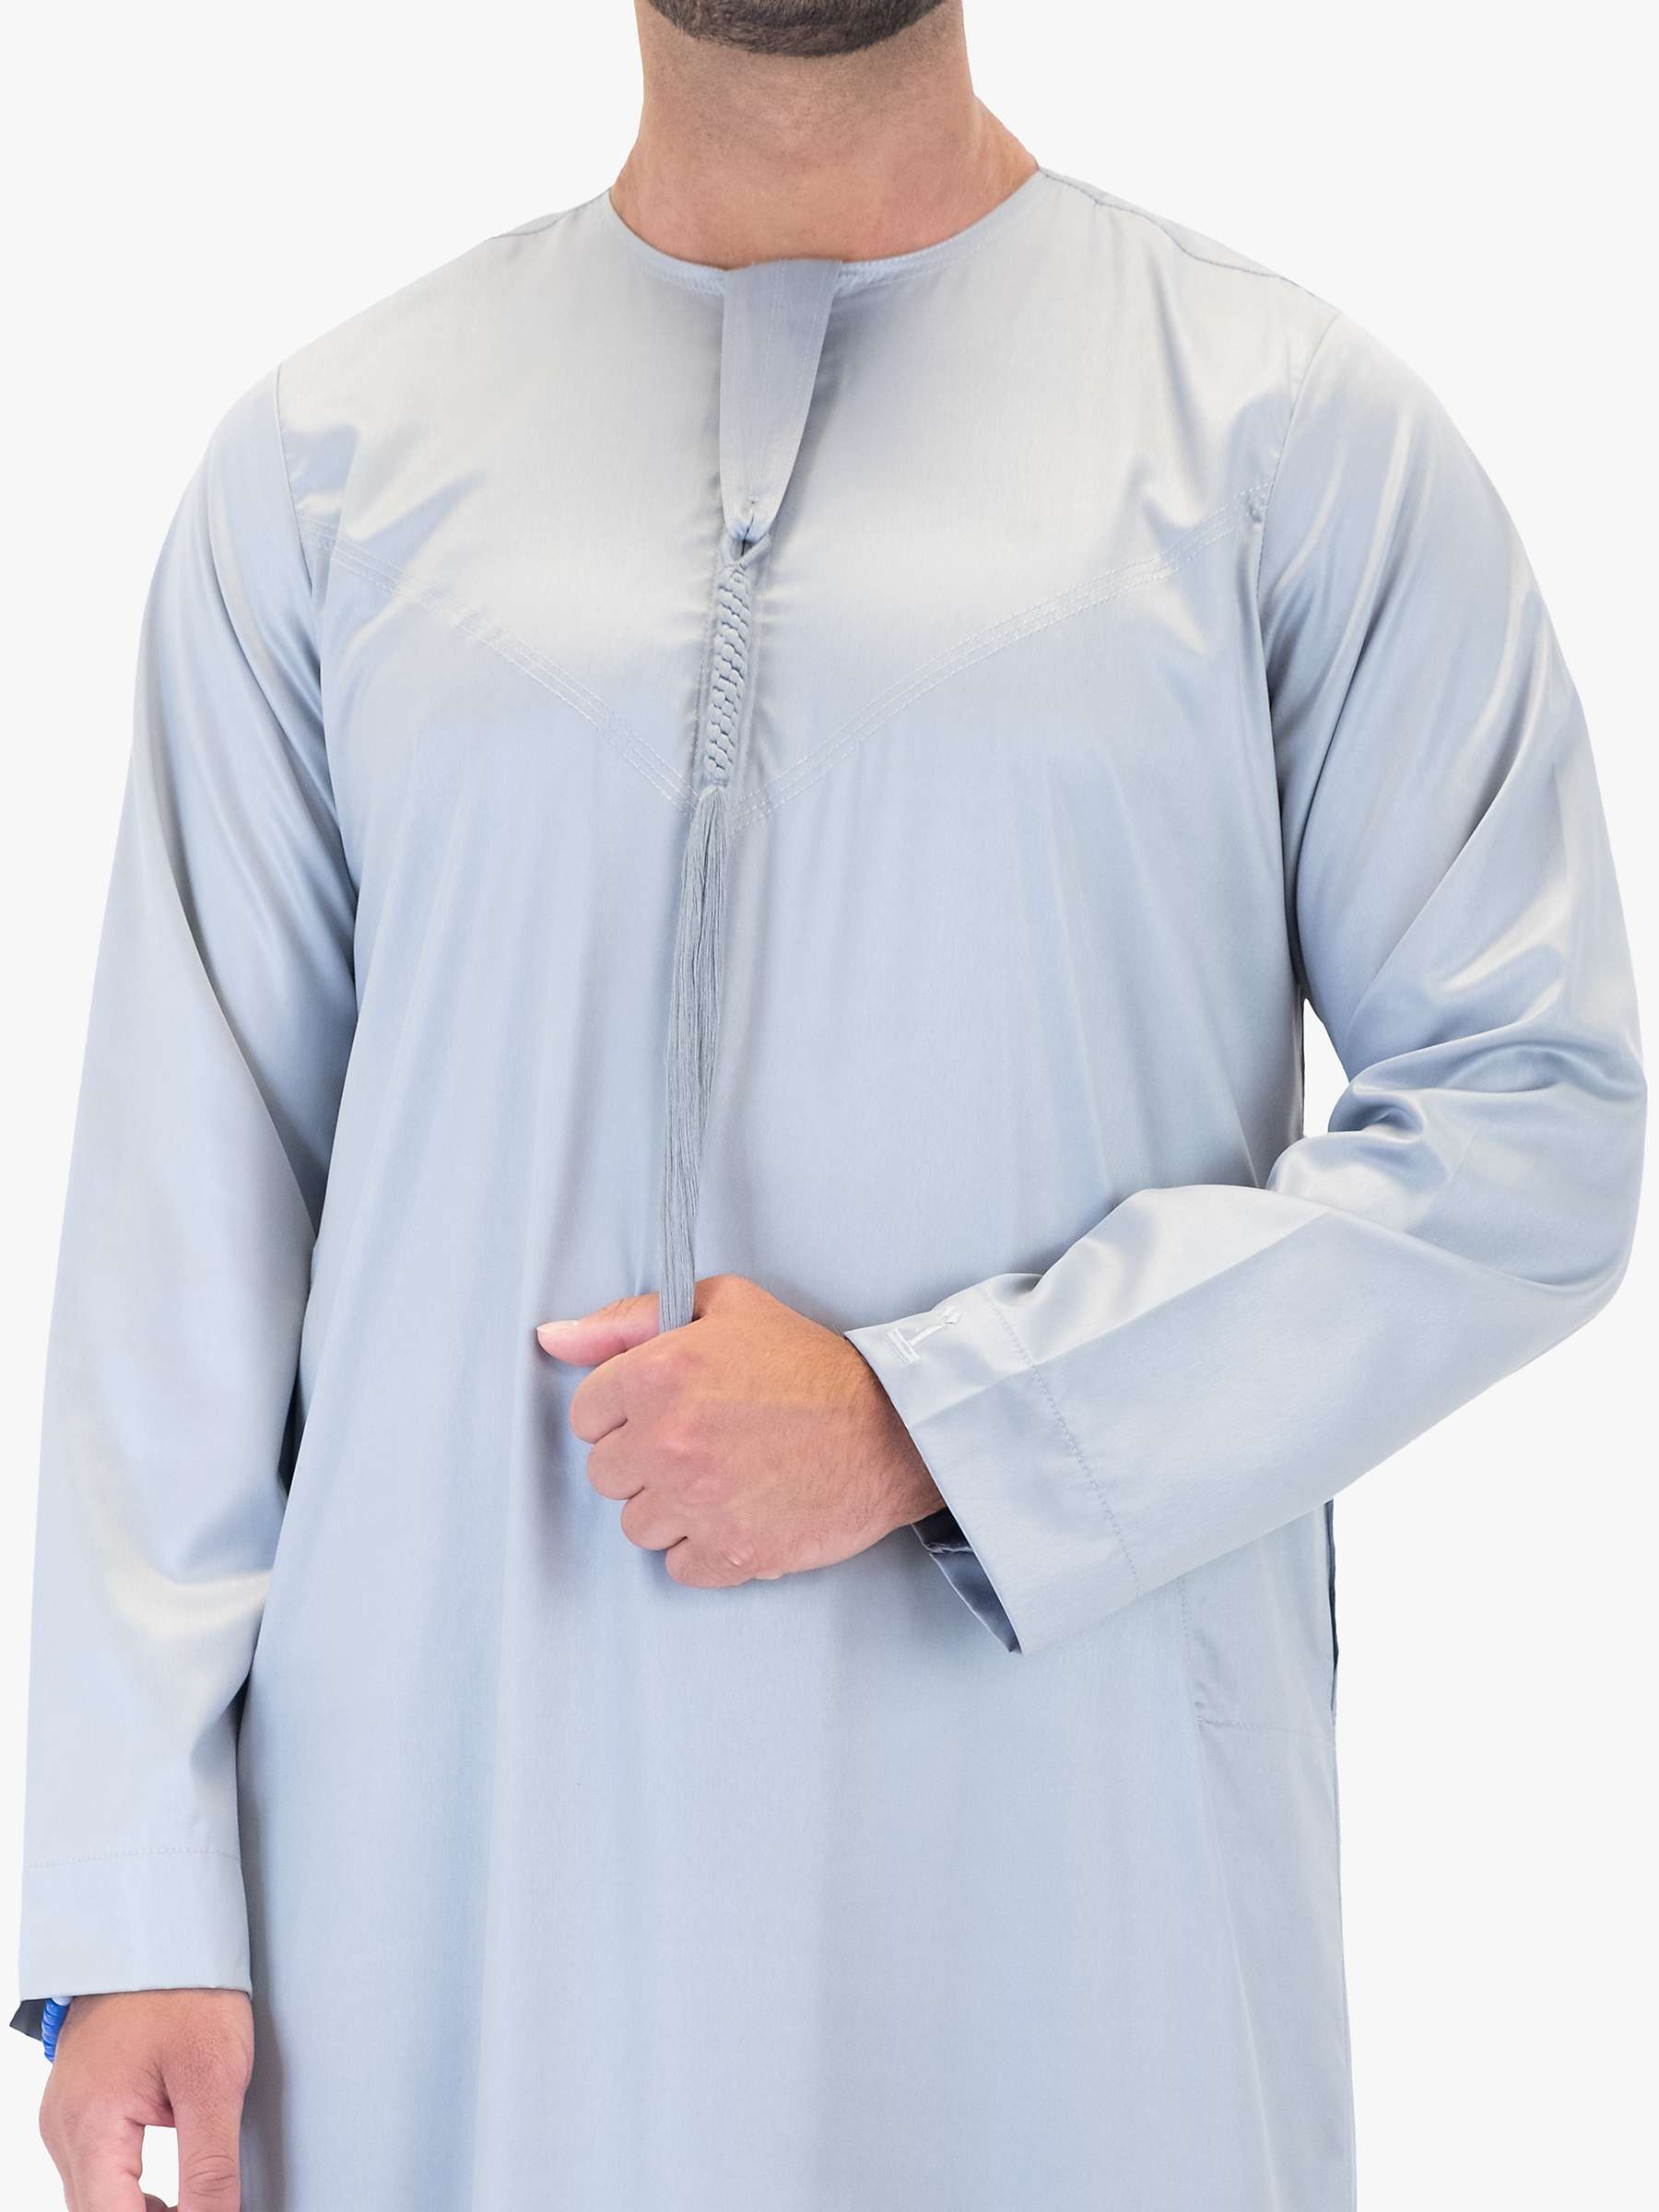 Buy Islamic Impressions Omani Silky Tassel Throbe Jubbah Online at johnlewis.com